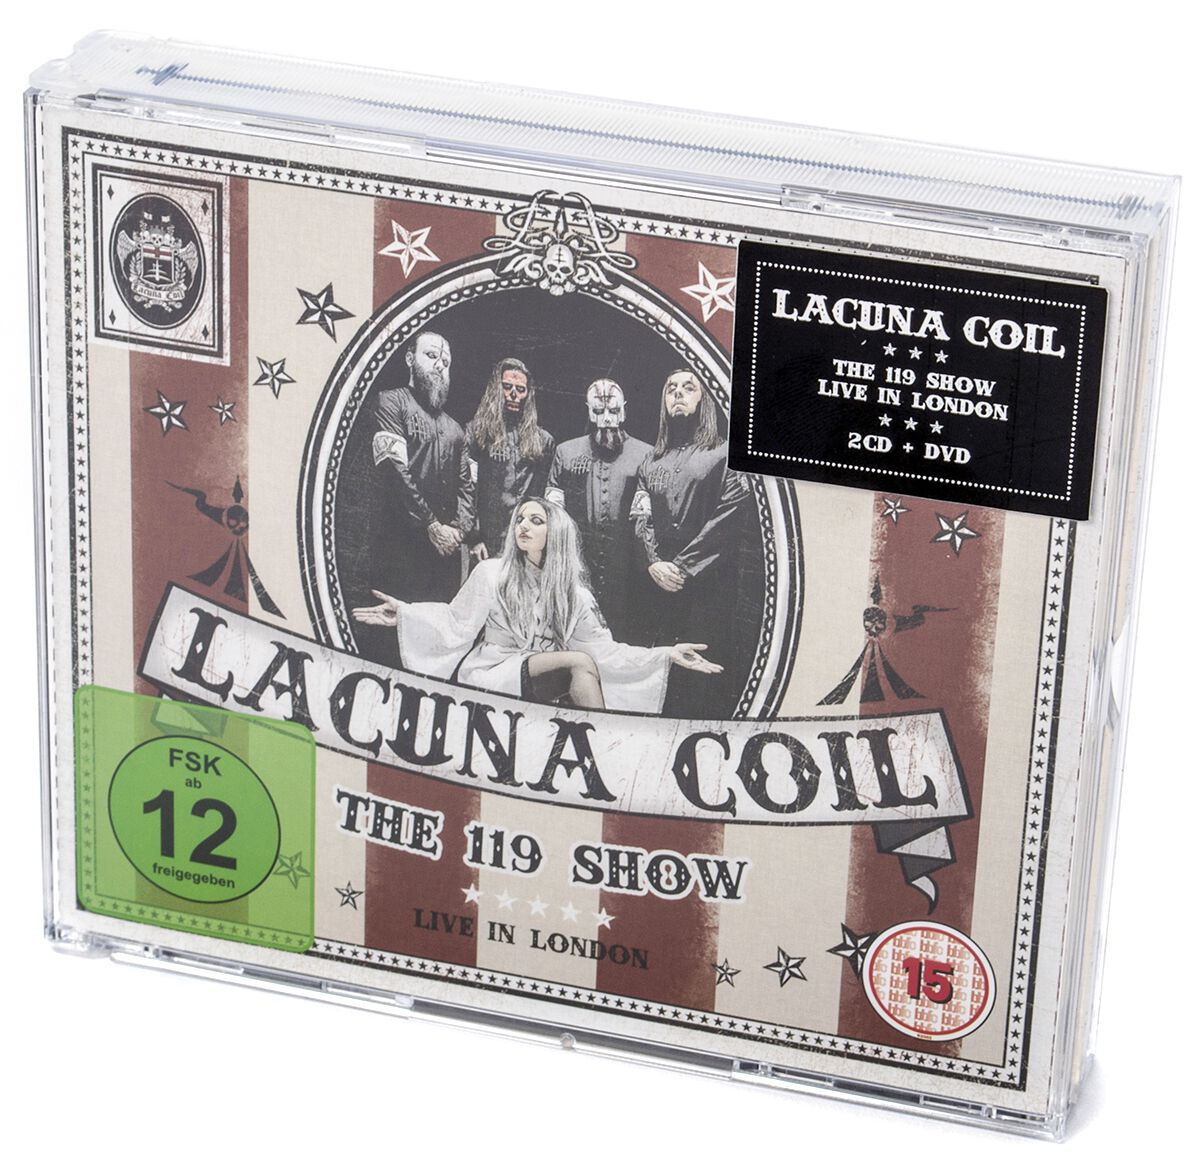 Lacuna Coil The 119 Show - Live in London DVD multicolor